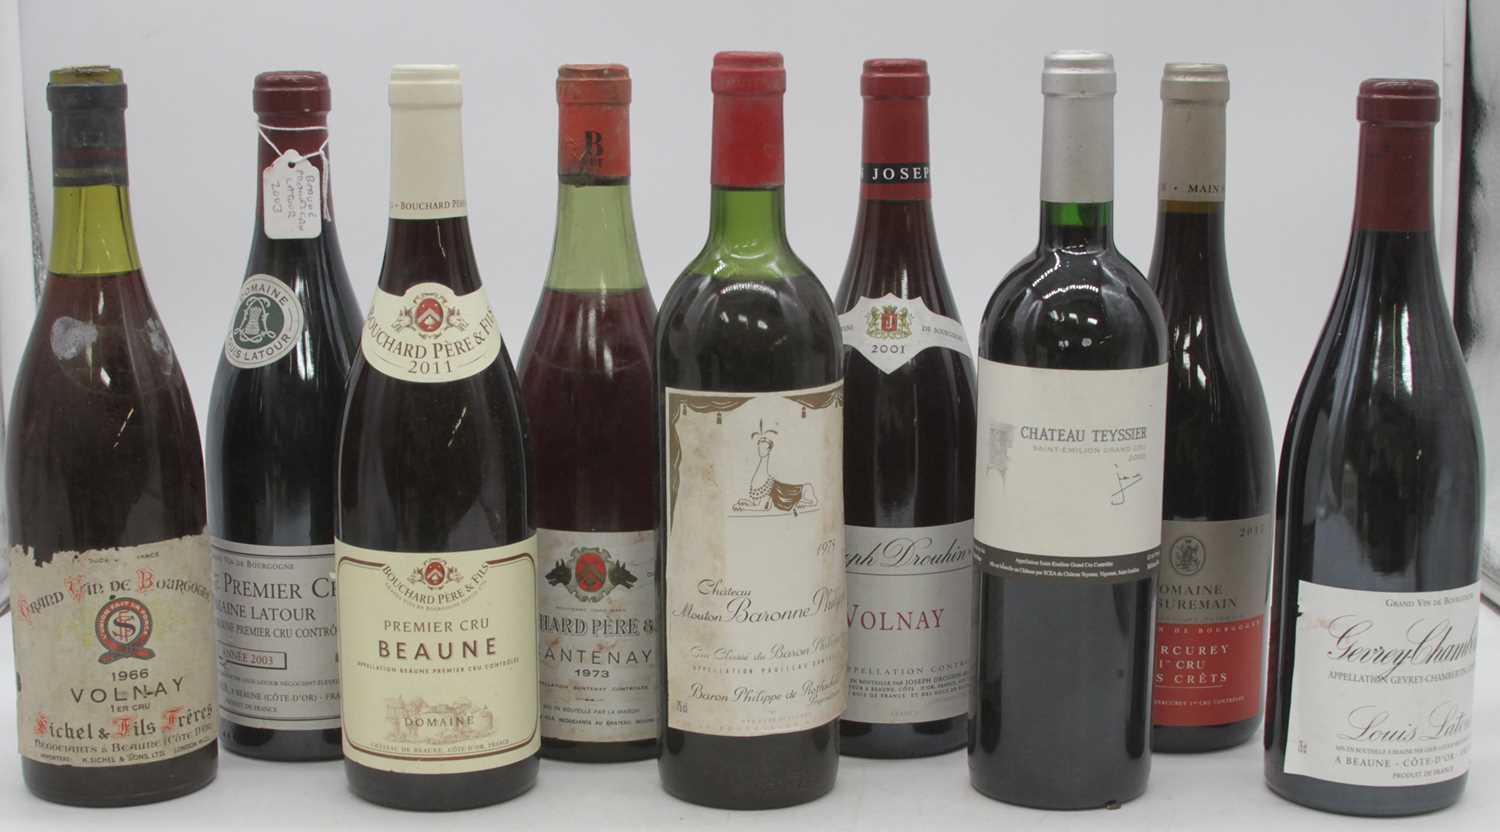 Louis Latour Gevrey-Chambertin, one bottle, Beaune Premier Cru Domaine Louis Latour 2003, one